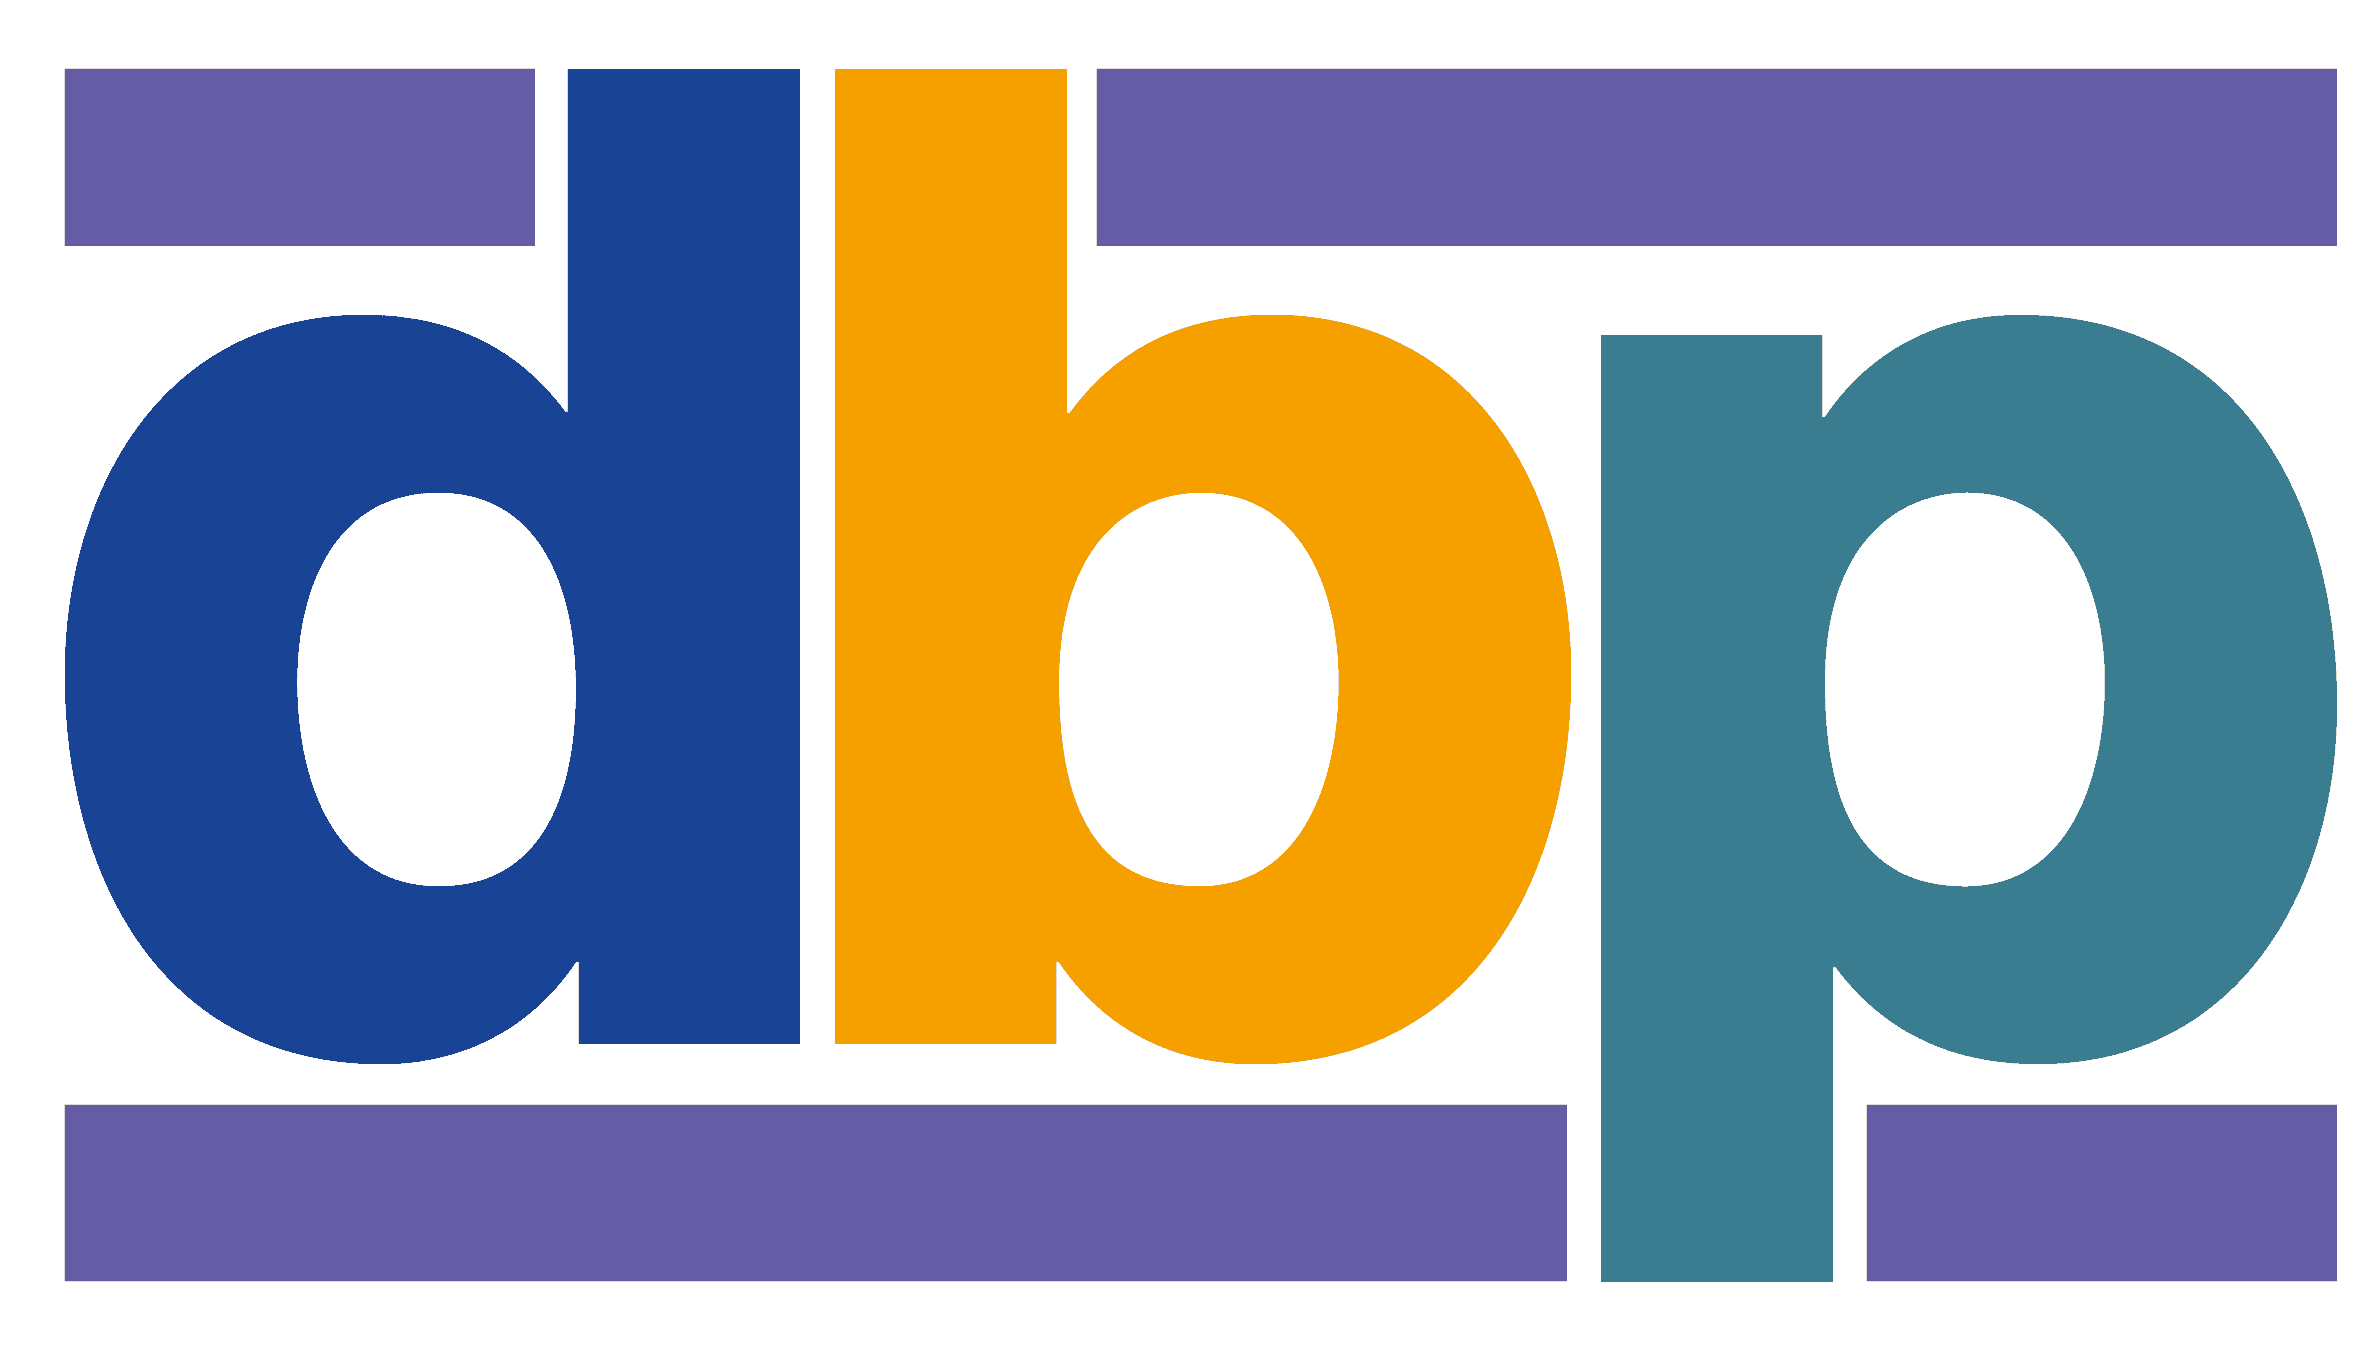 nieuw logo DB